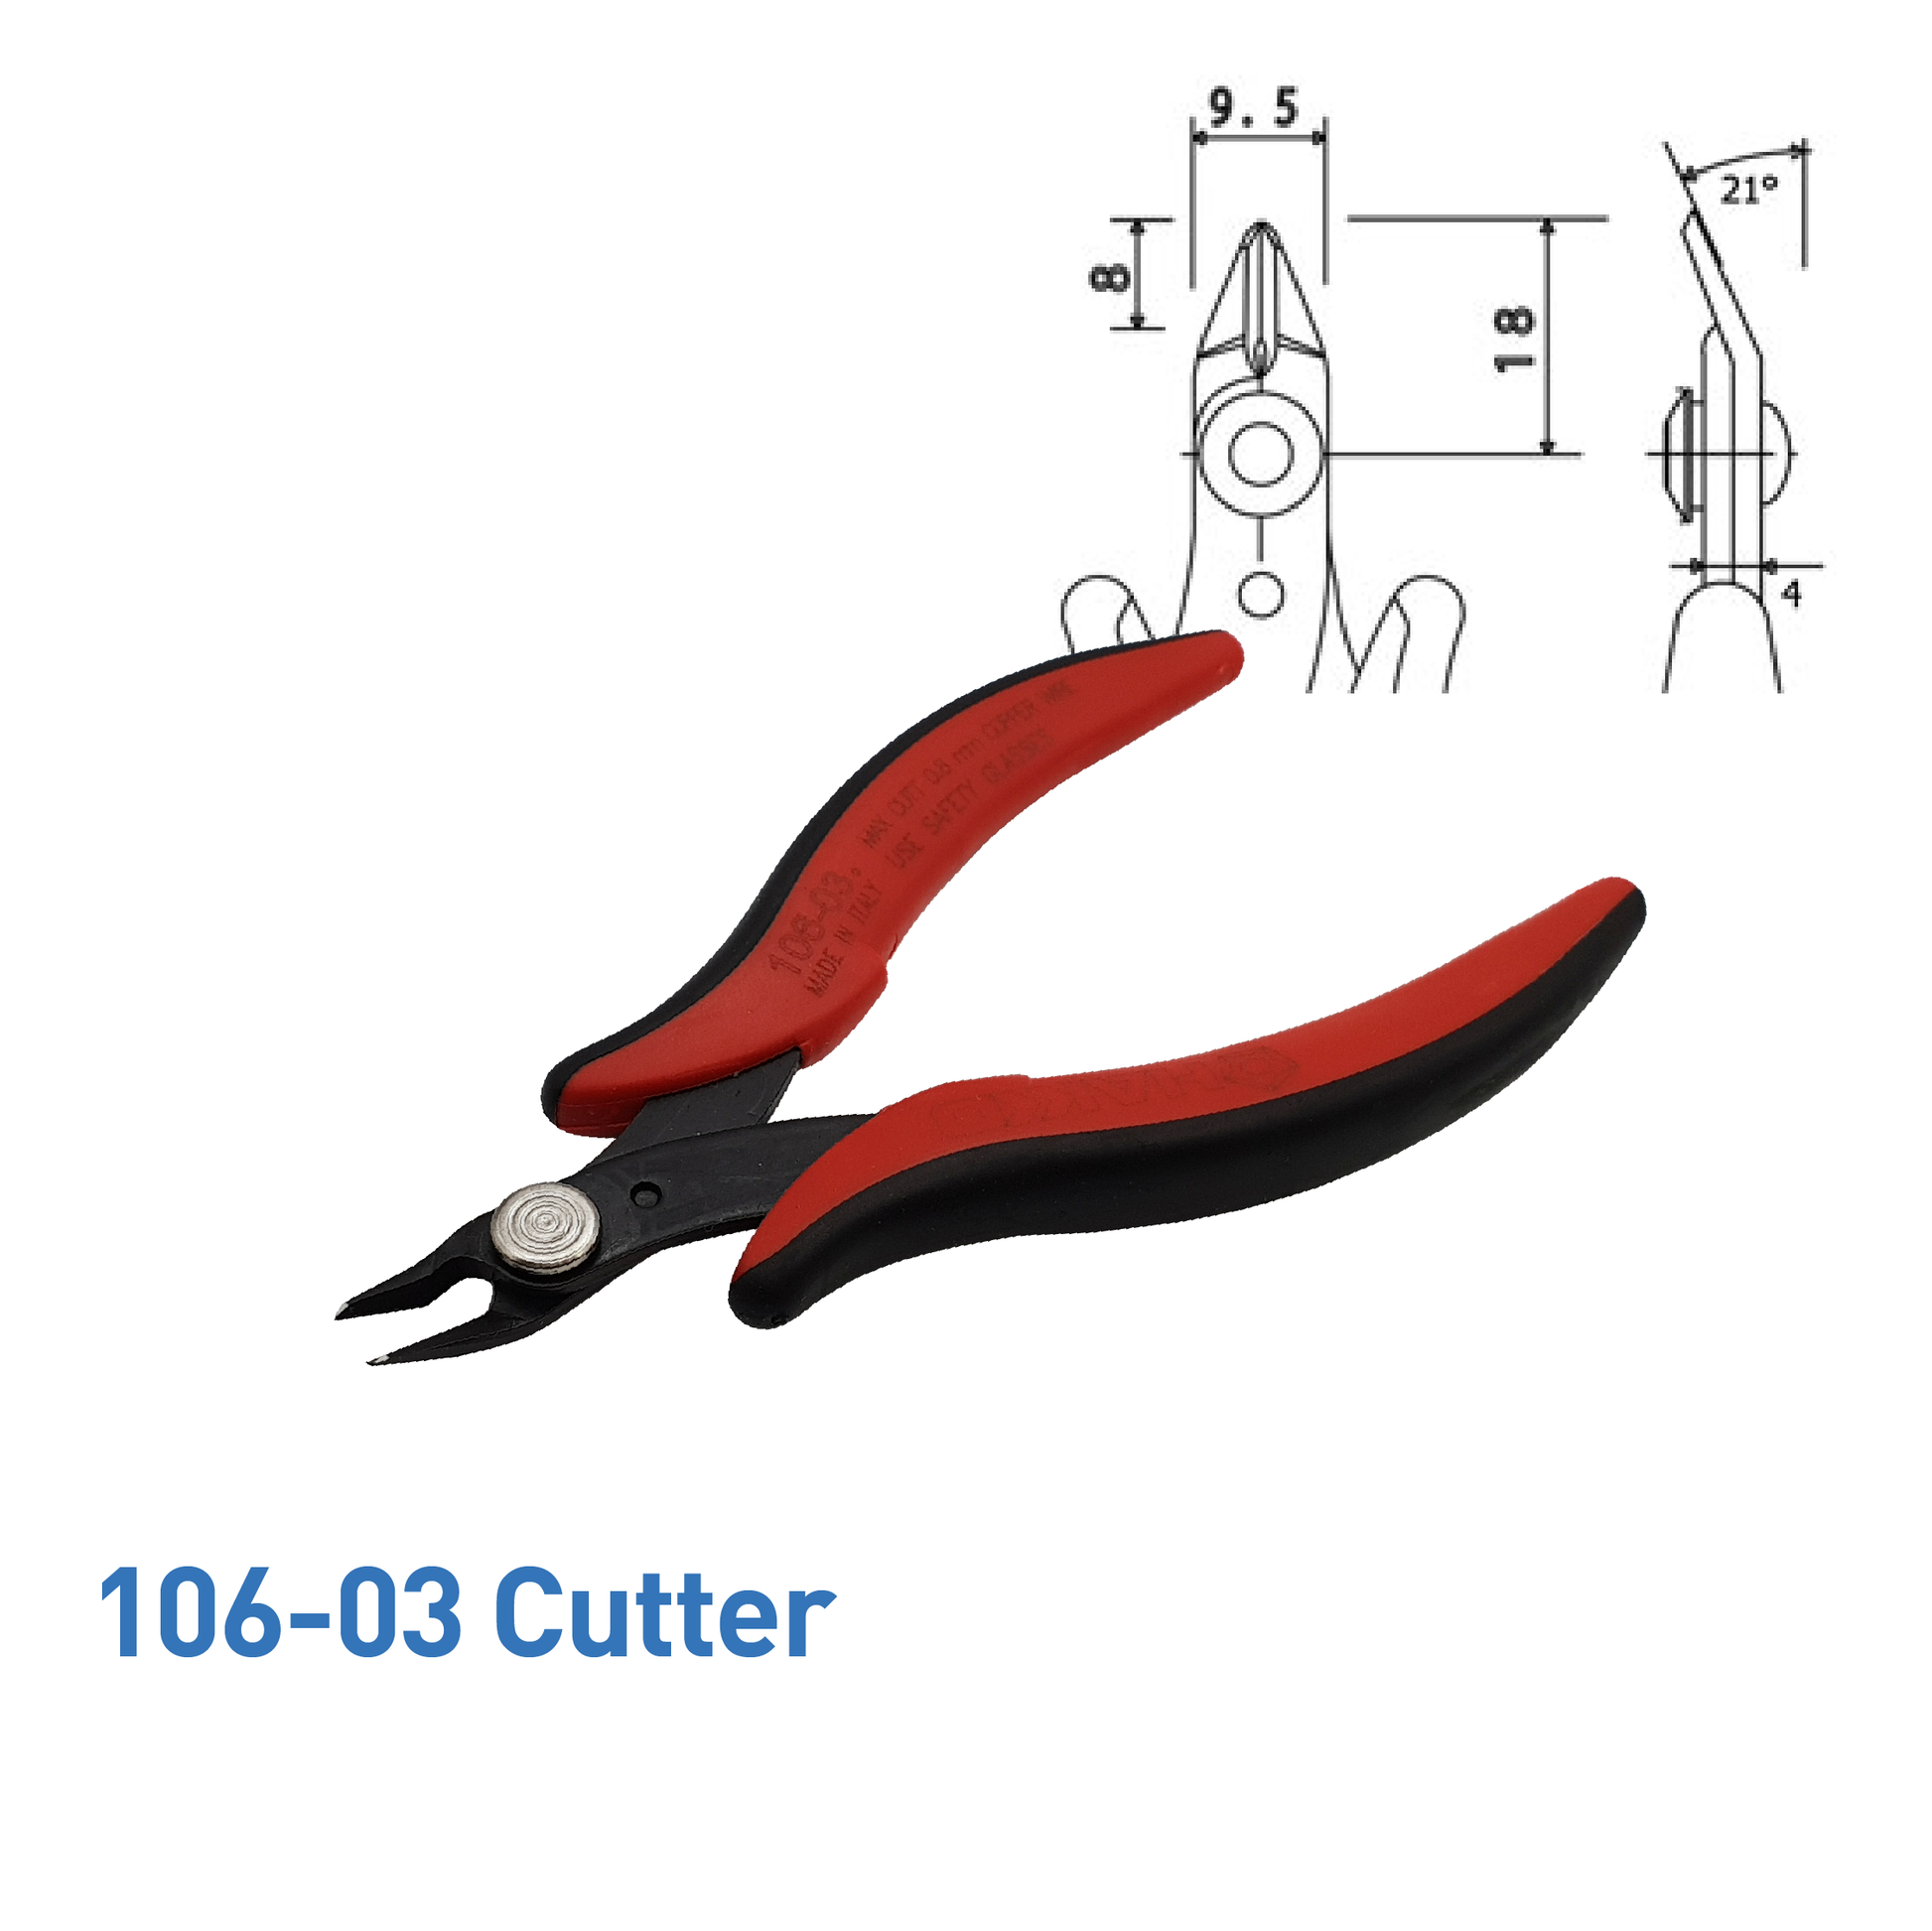 Hakko_ 106-03 Cutting Tool_ Cutters, Pliers, Multi-Tools_ Hakko Products